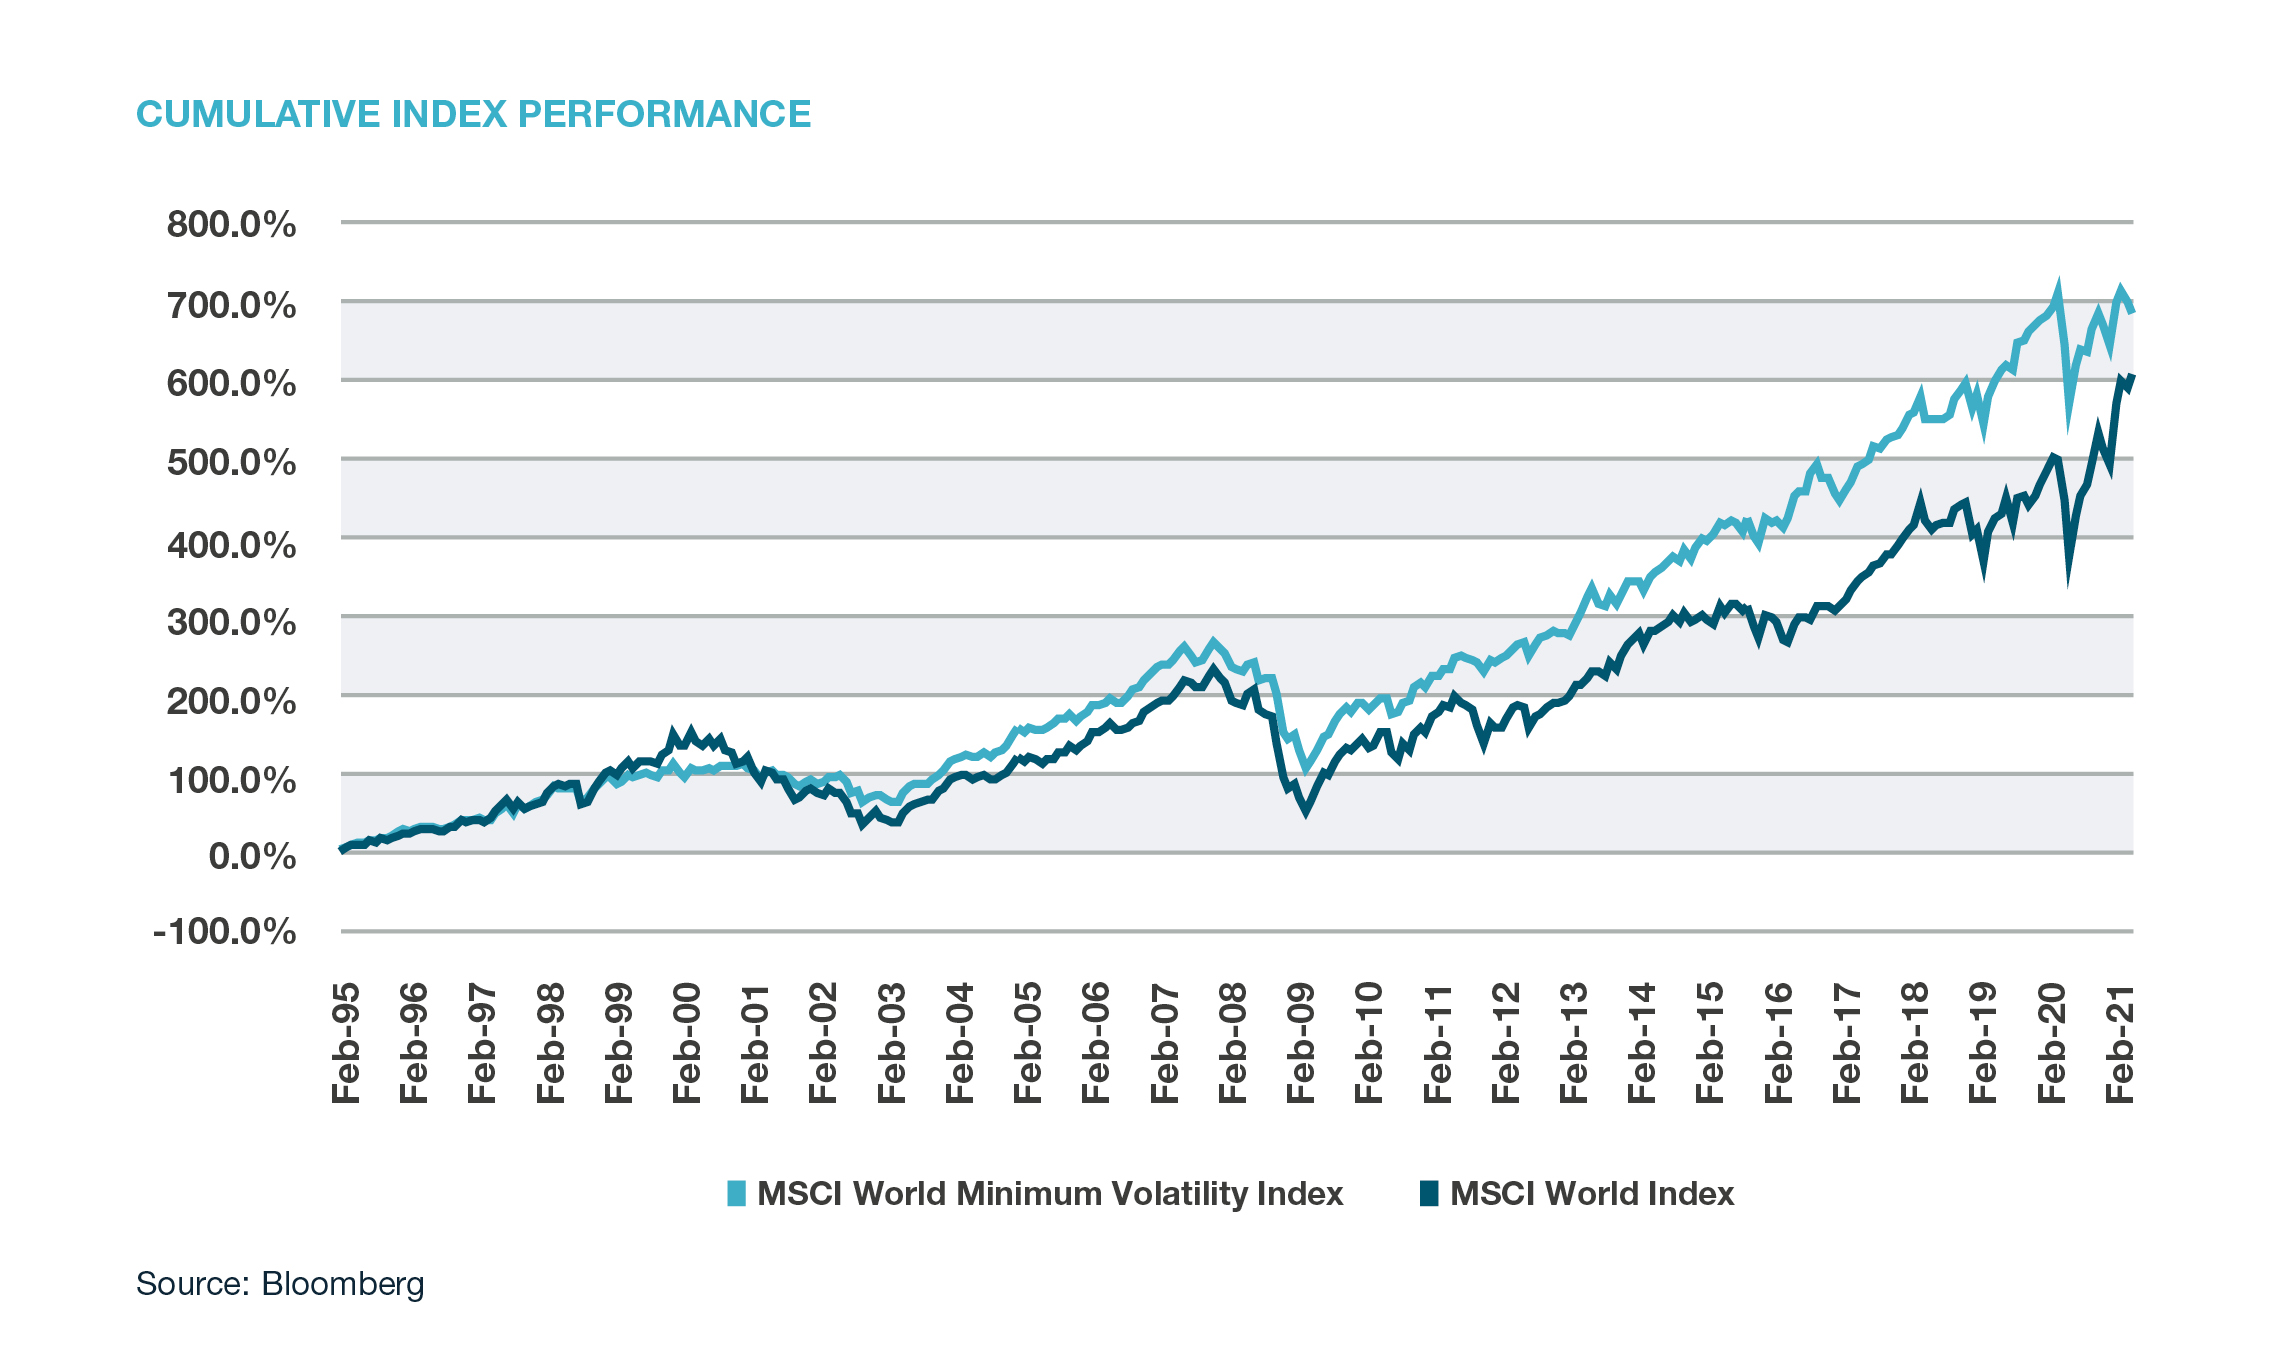 MSCI World Minimum Volatility Index